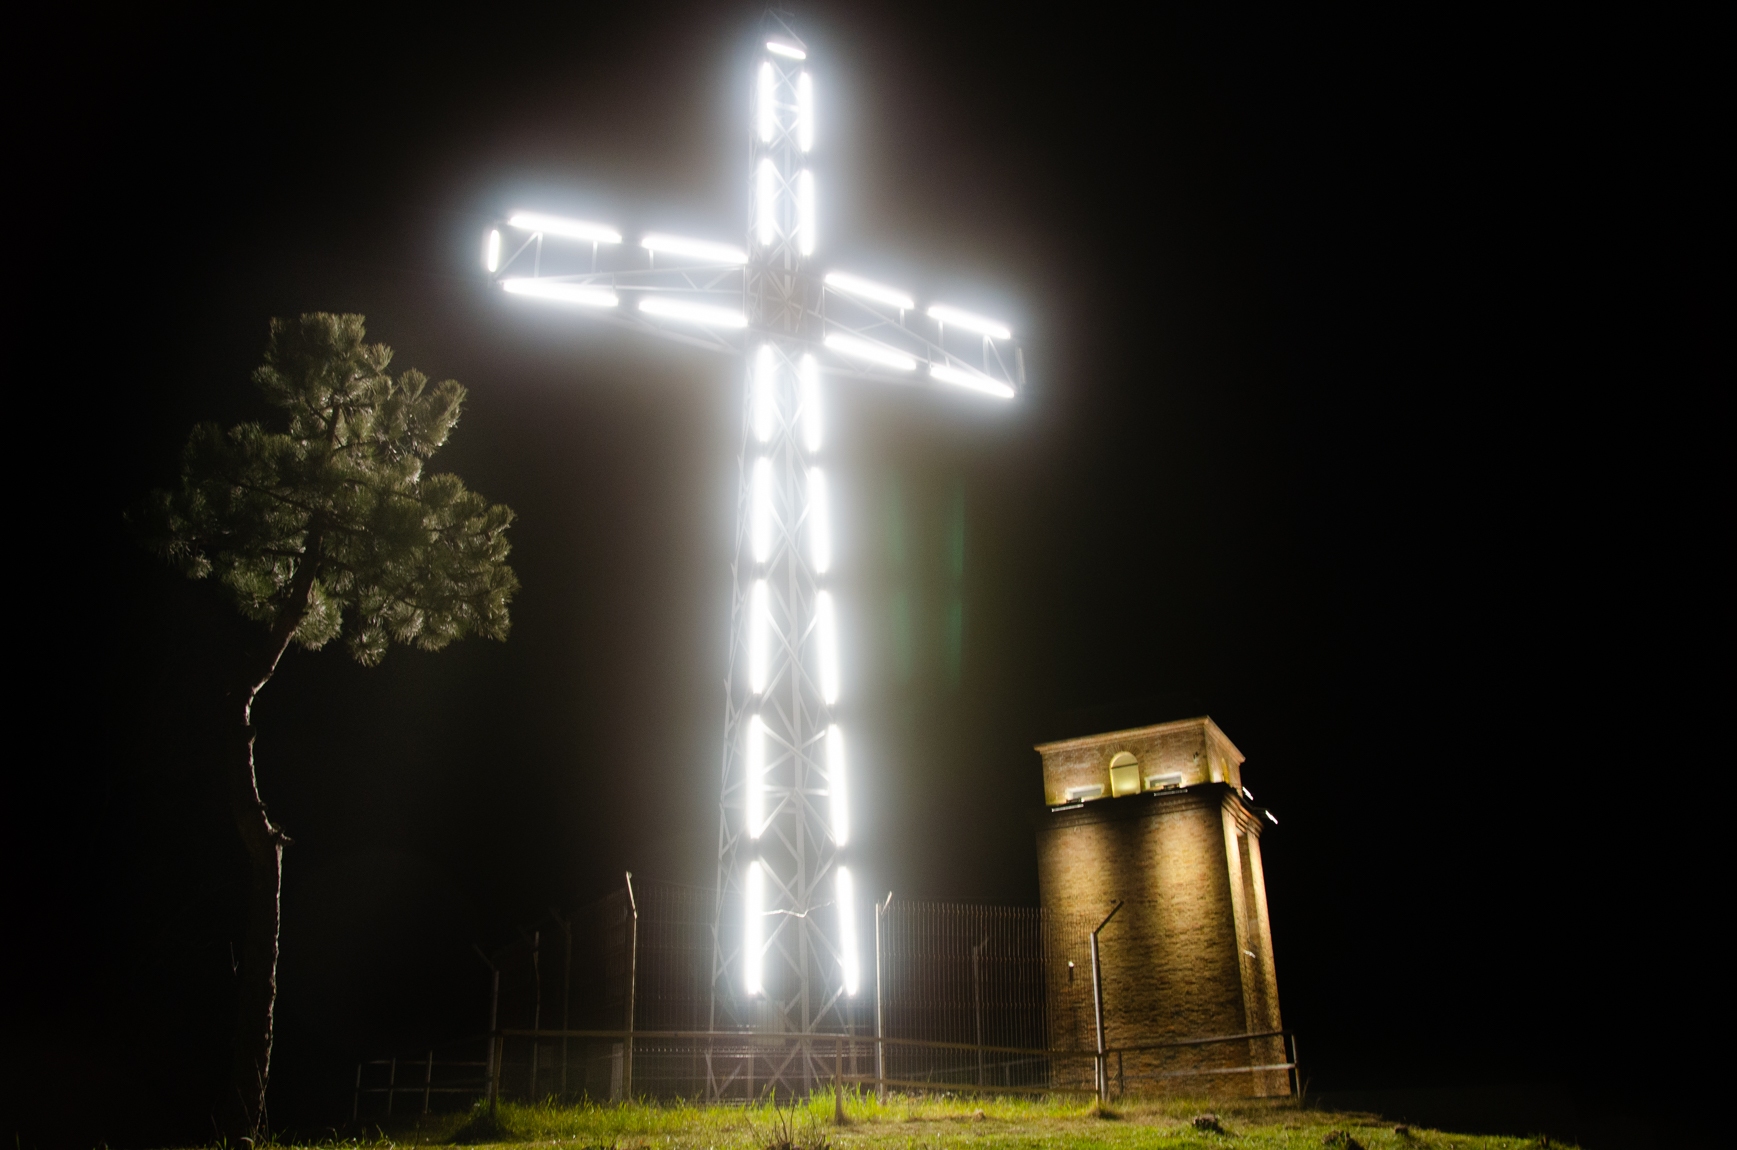 Turnul și crucea iluminate Dealul Gușteriței